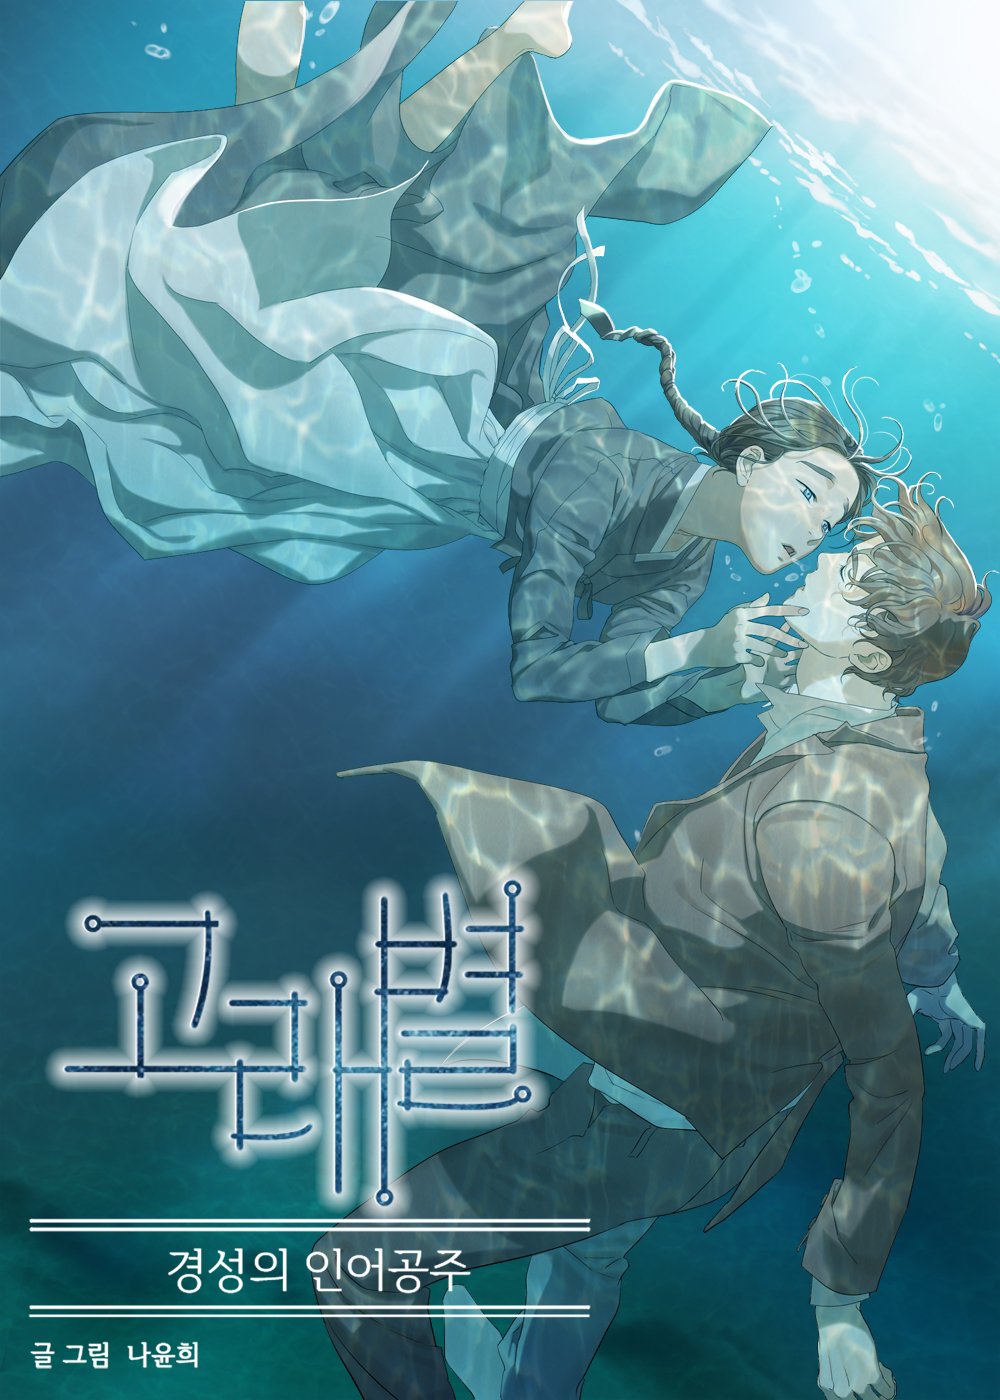 Gorae Byul - The Gyeongseong Mermaid Manga